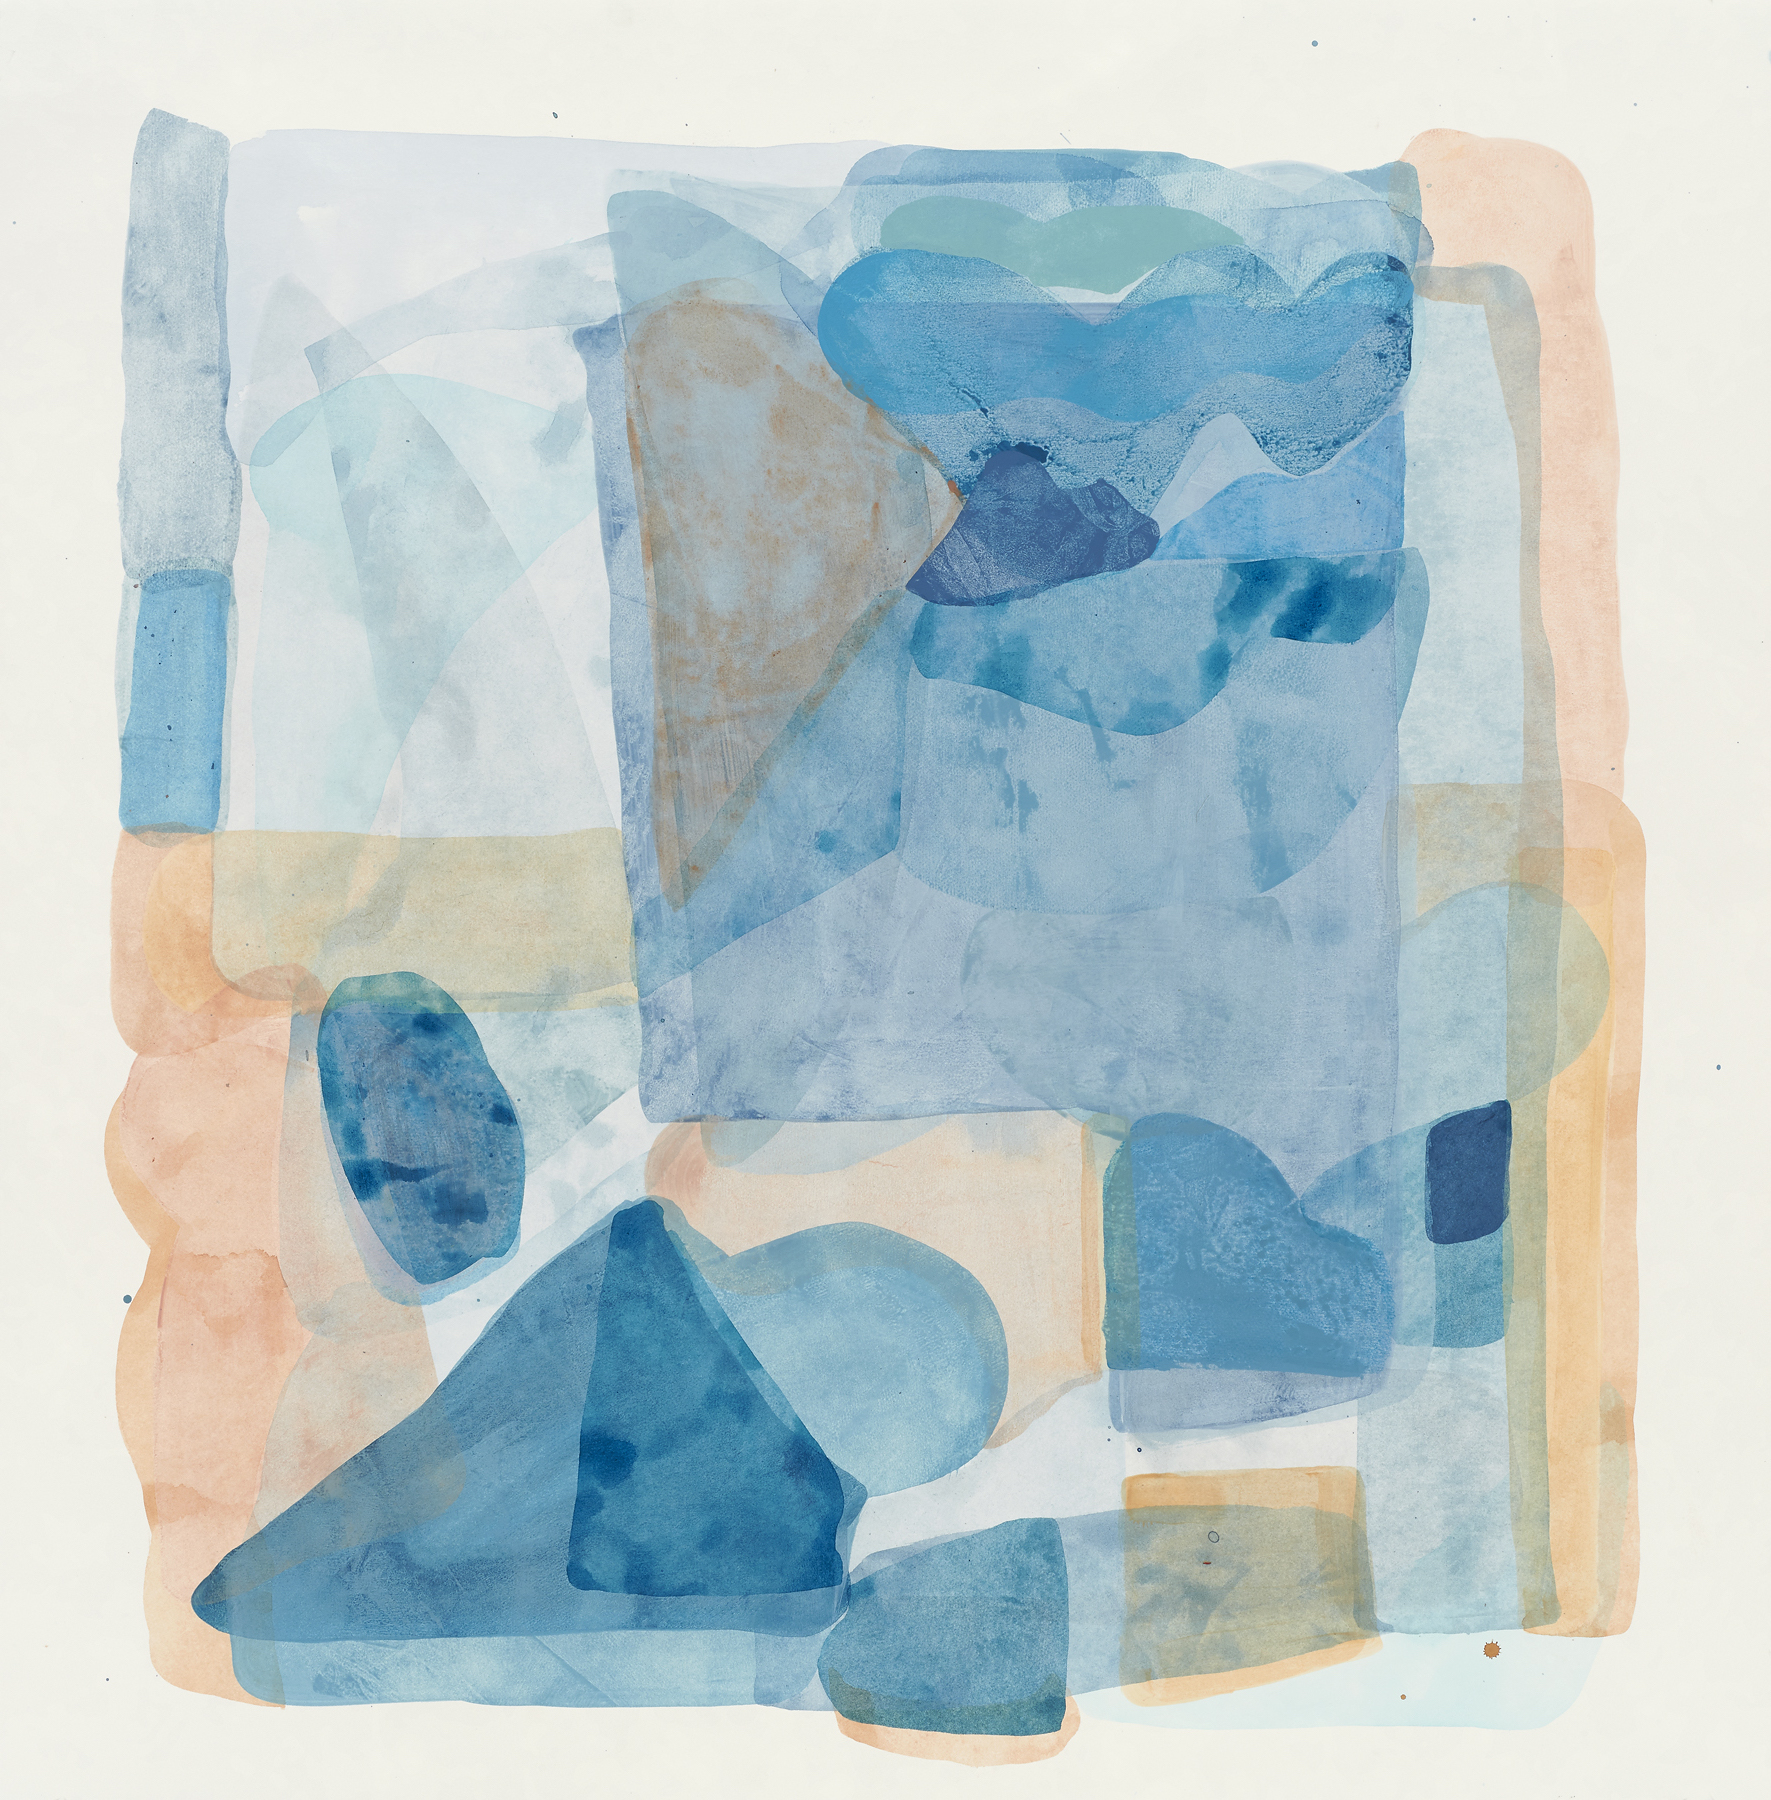 Light Blue-5, 2019, mixed media on paper, 28.5 x 28"